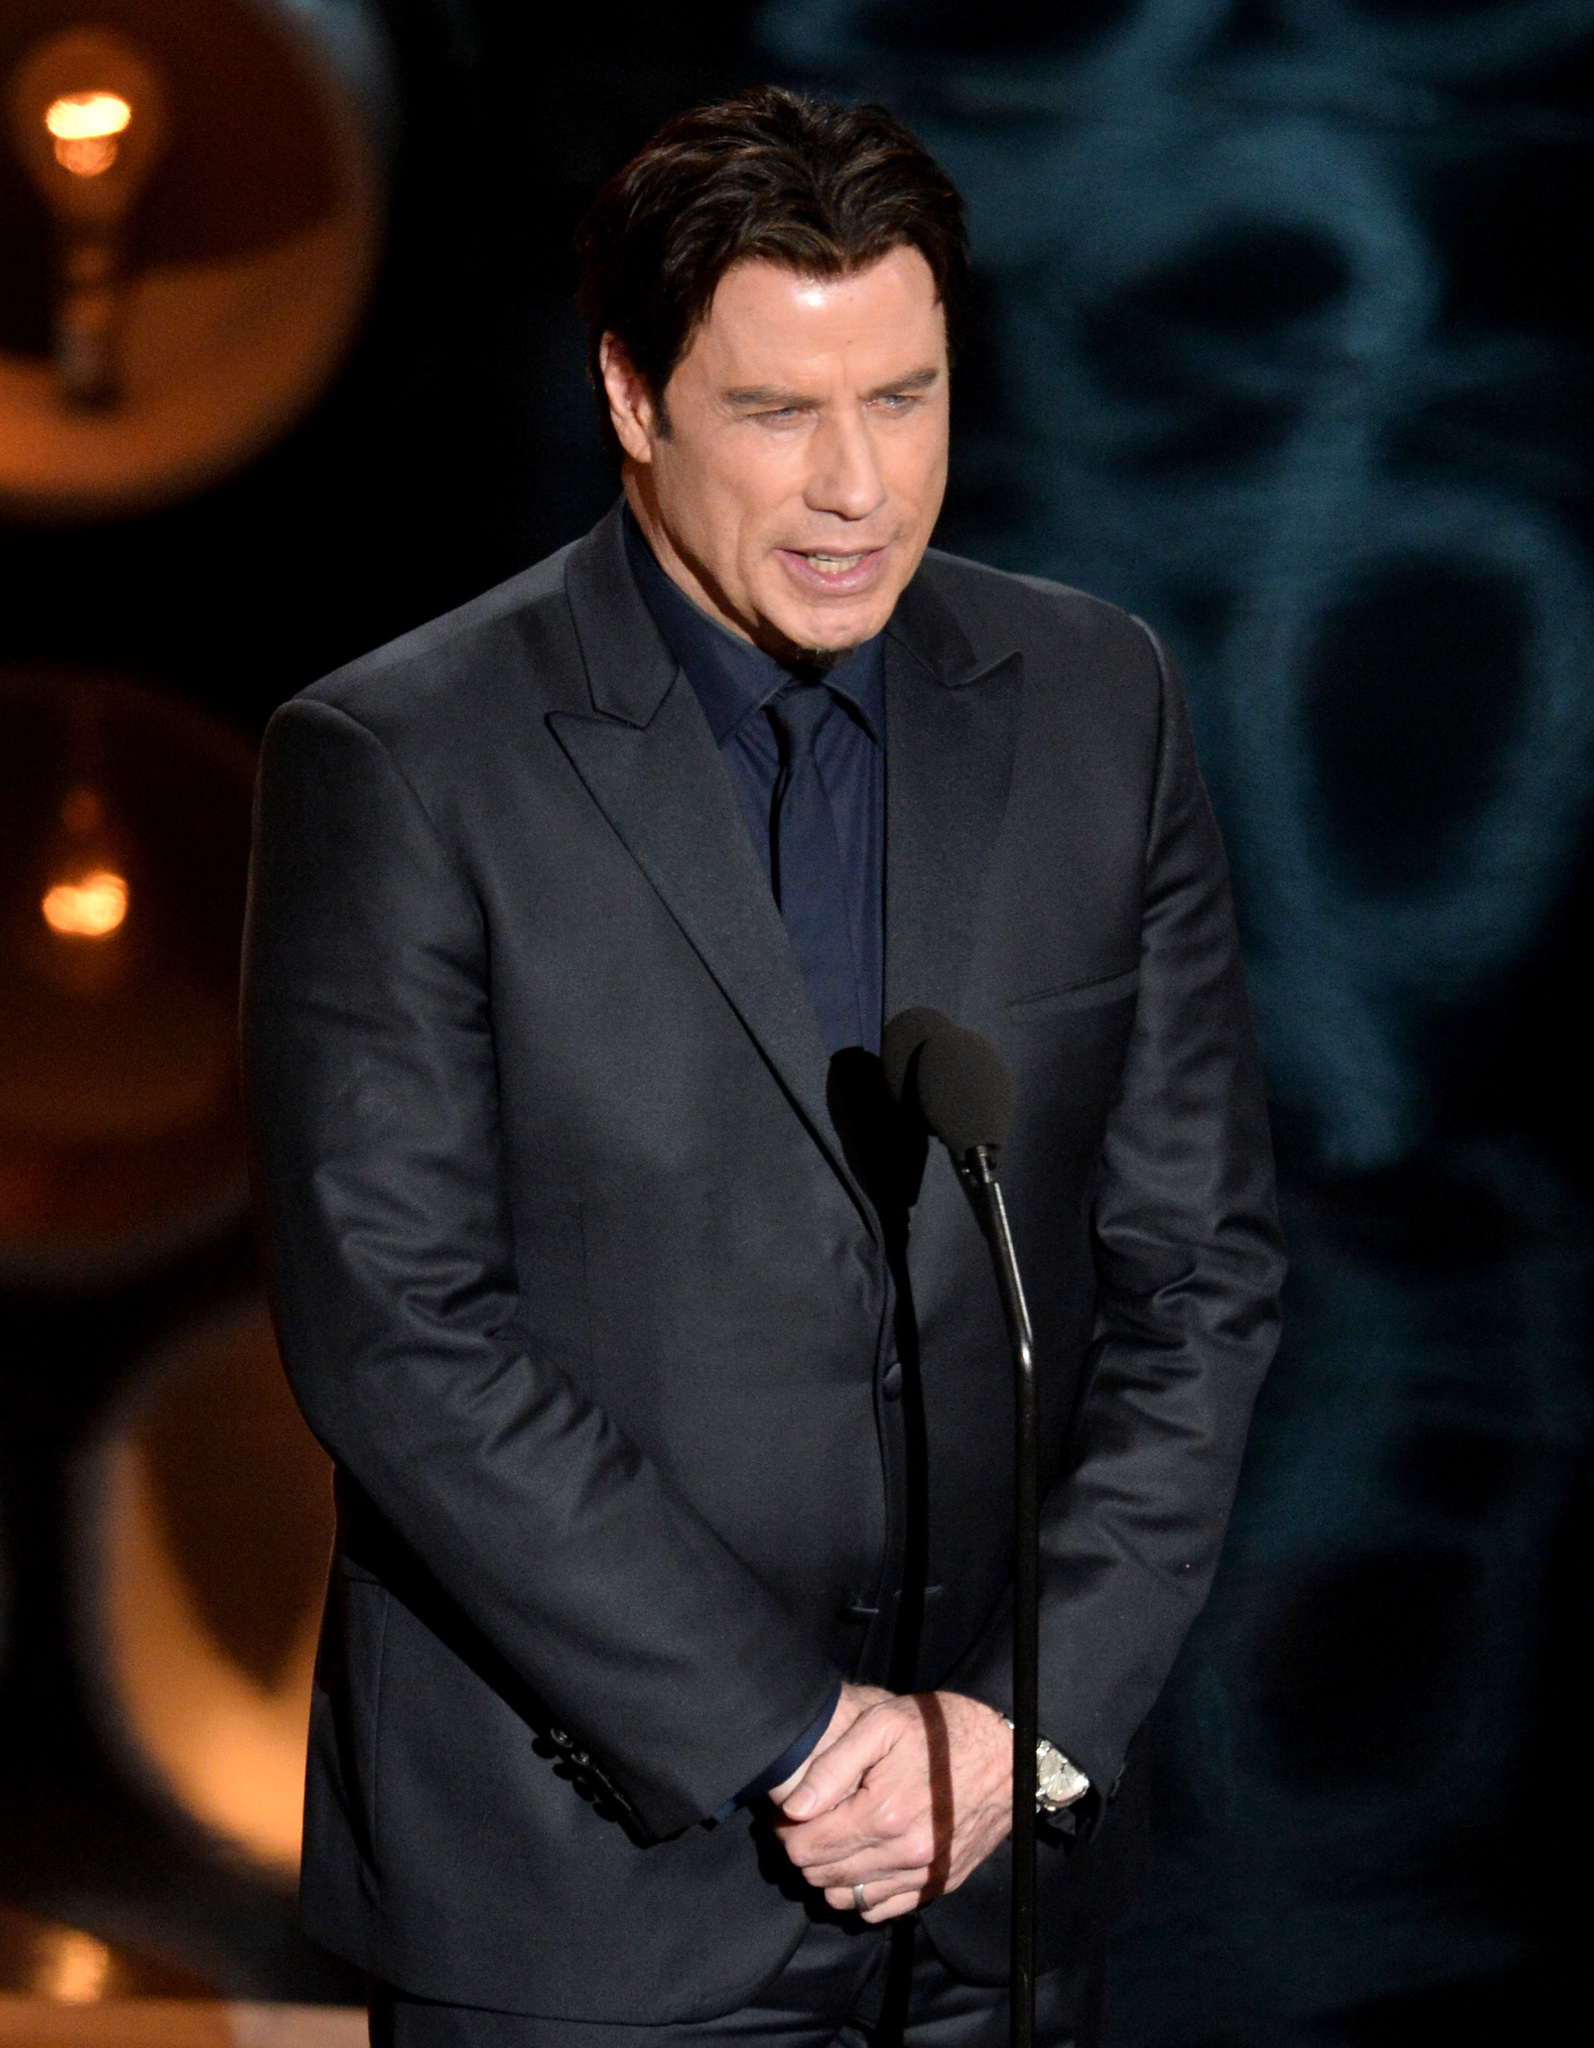 John Travolta at event of The Oscars (2014)